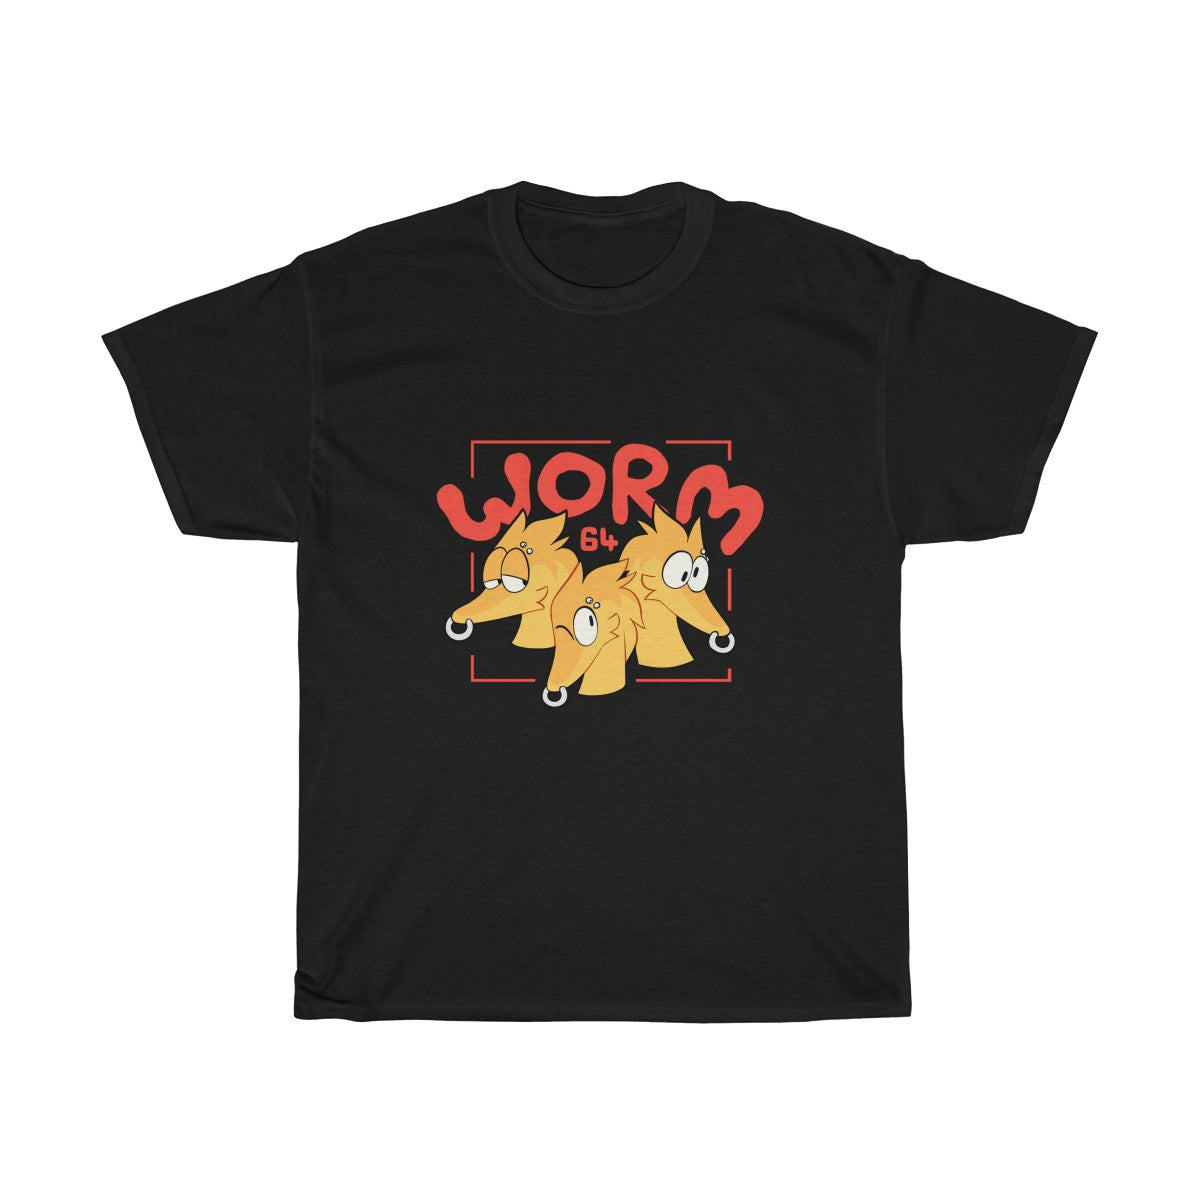 Worm 64 - T-Shirt T-Shirt Motfal Black S 